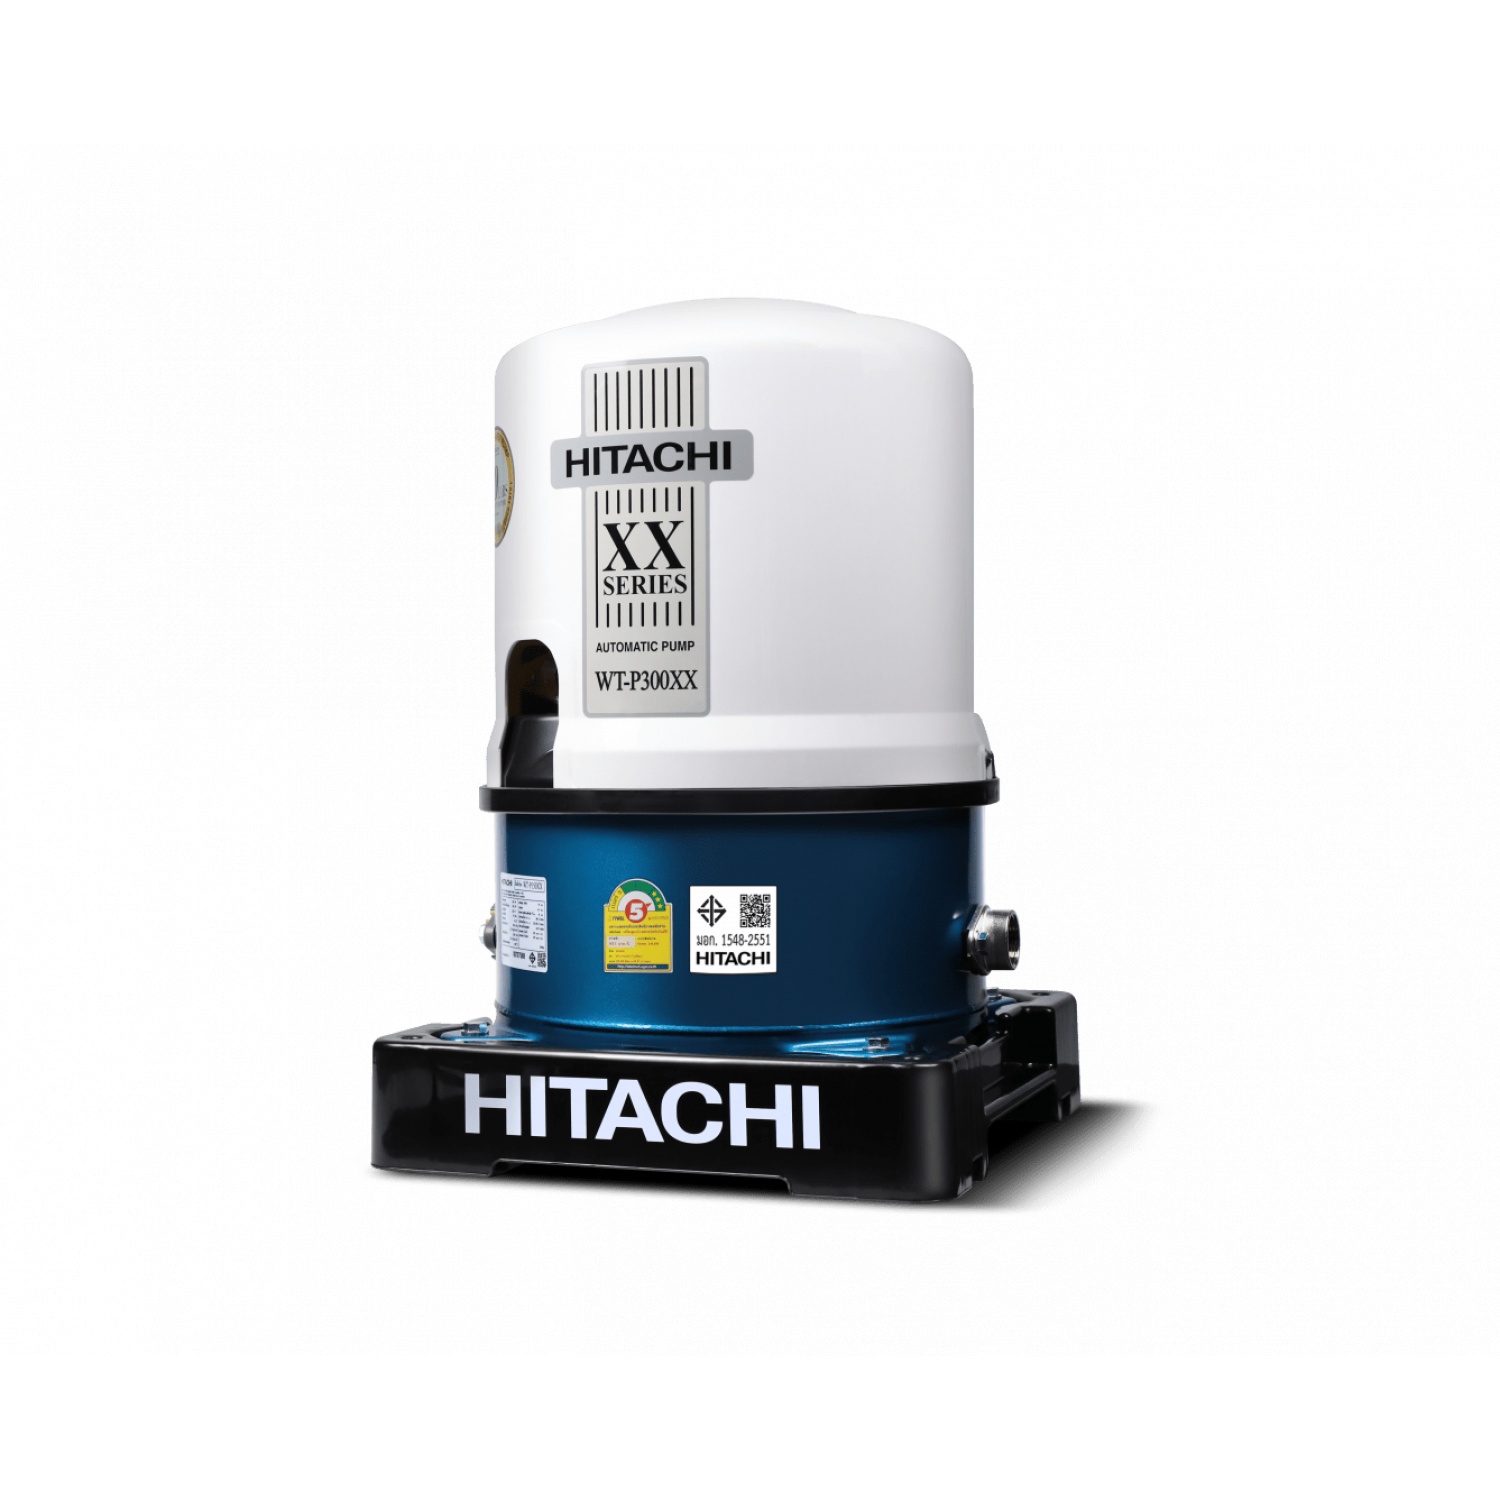 HITACHI ปั๊มน้ำอัตโนมัติ300W  WT-P300XX สีน้ำเงิน